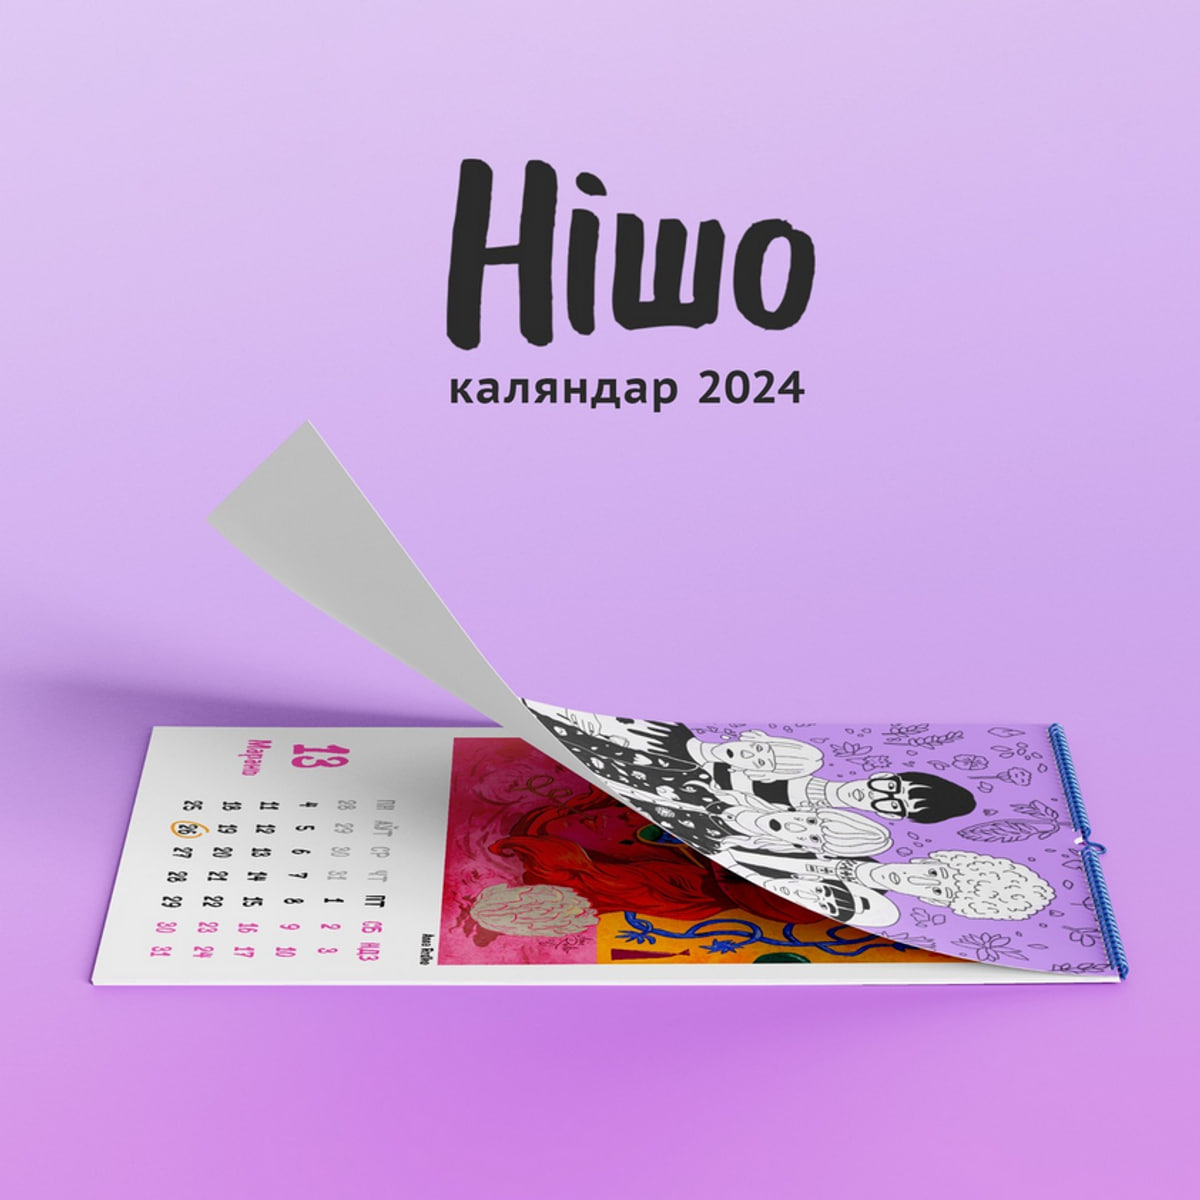 Беларусы придумали классный календарь на 2024-й - CityDog.io